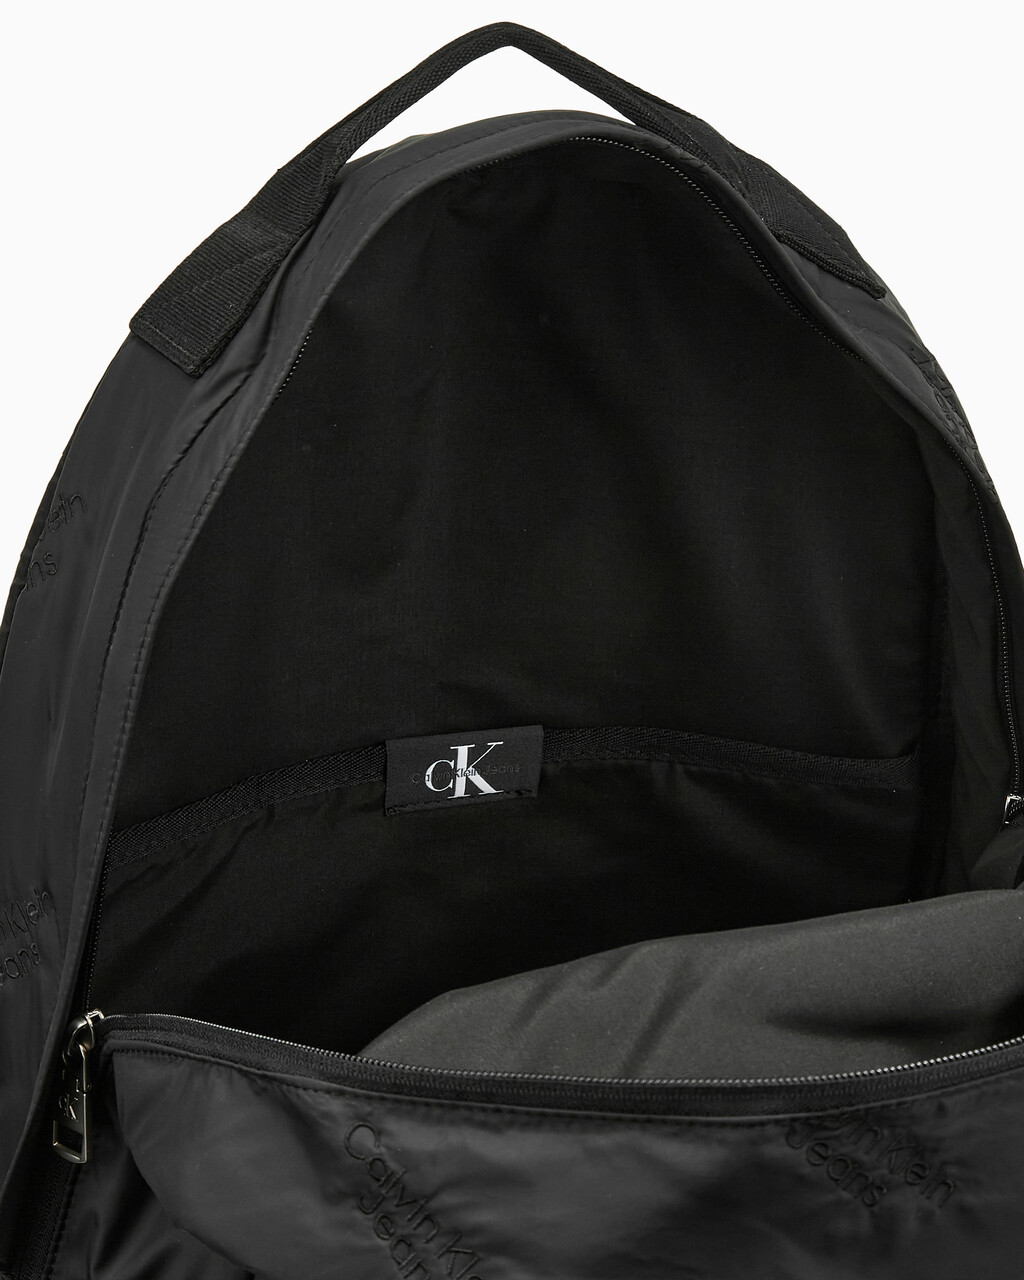 Buy 남성 CKJ 스포츠 에센셜 캠퍼스 백팩 in color BLACK